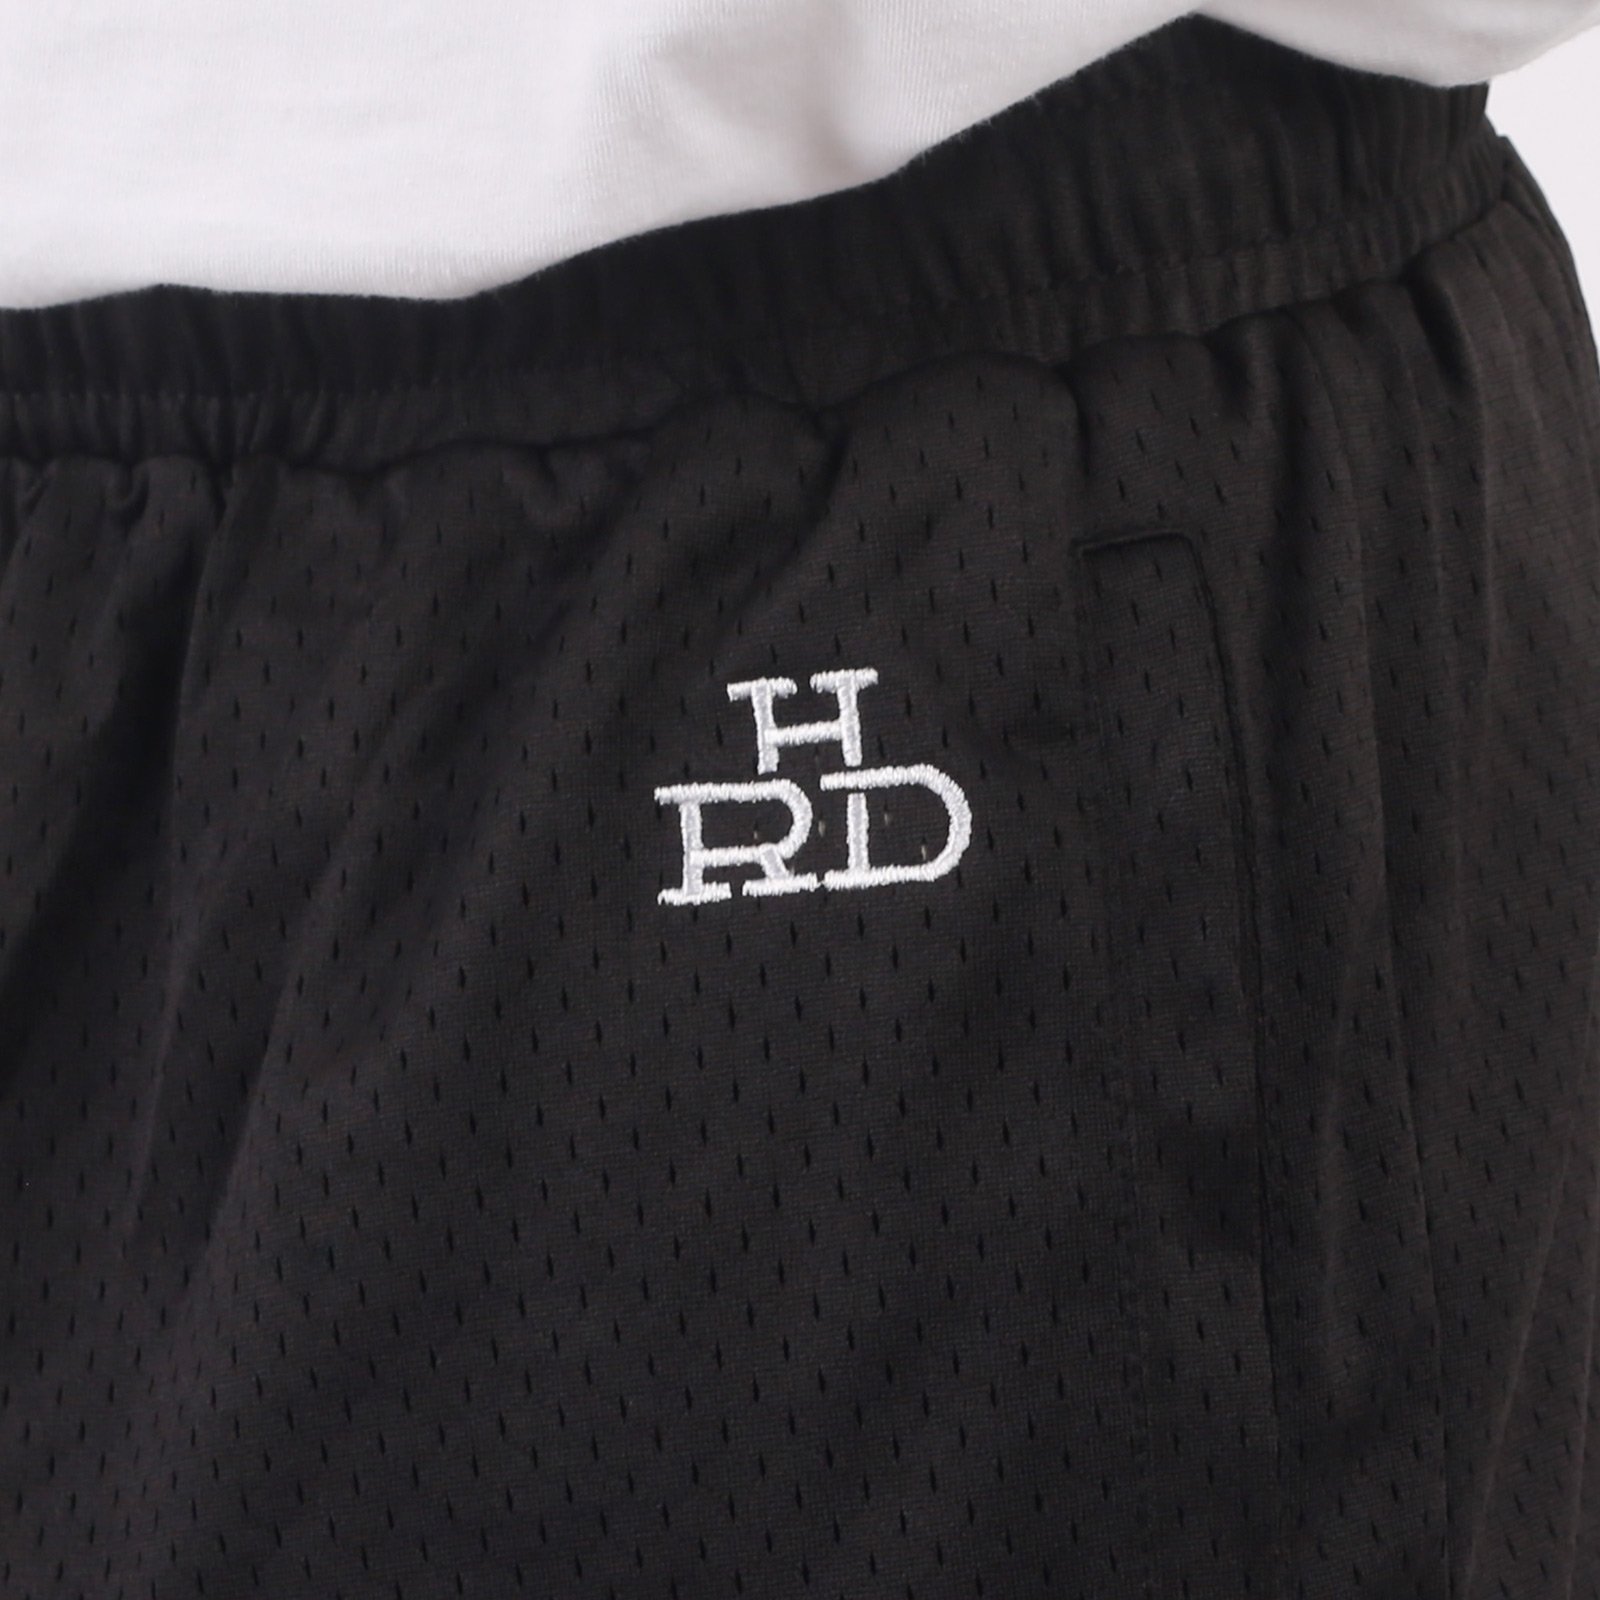 мужские шорты  Hard Open Run  (Open run-blk/wht)  - цена, описание, фото 5